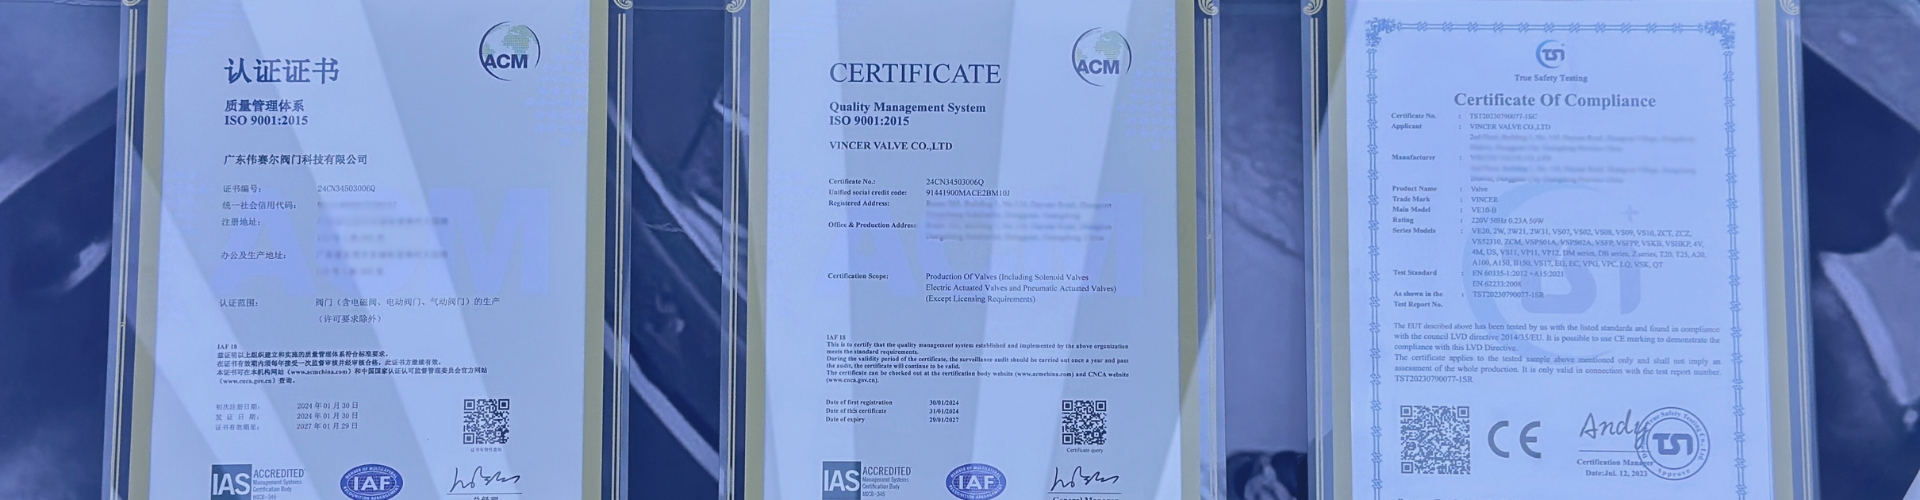 banner of certification